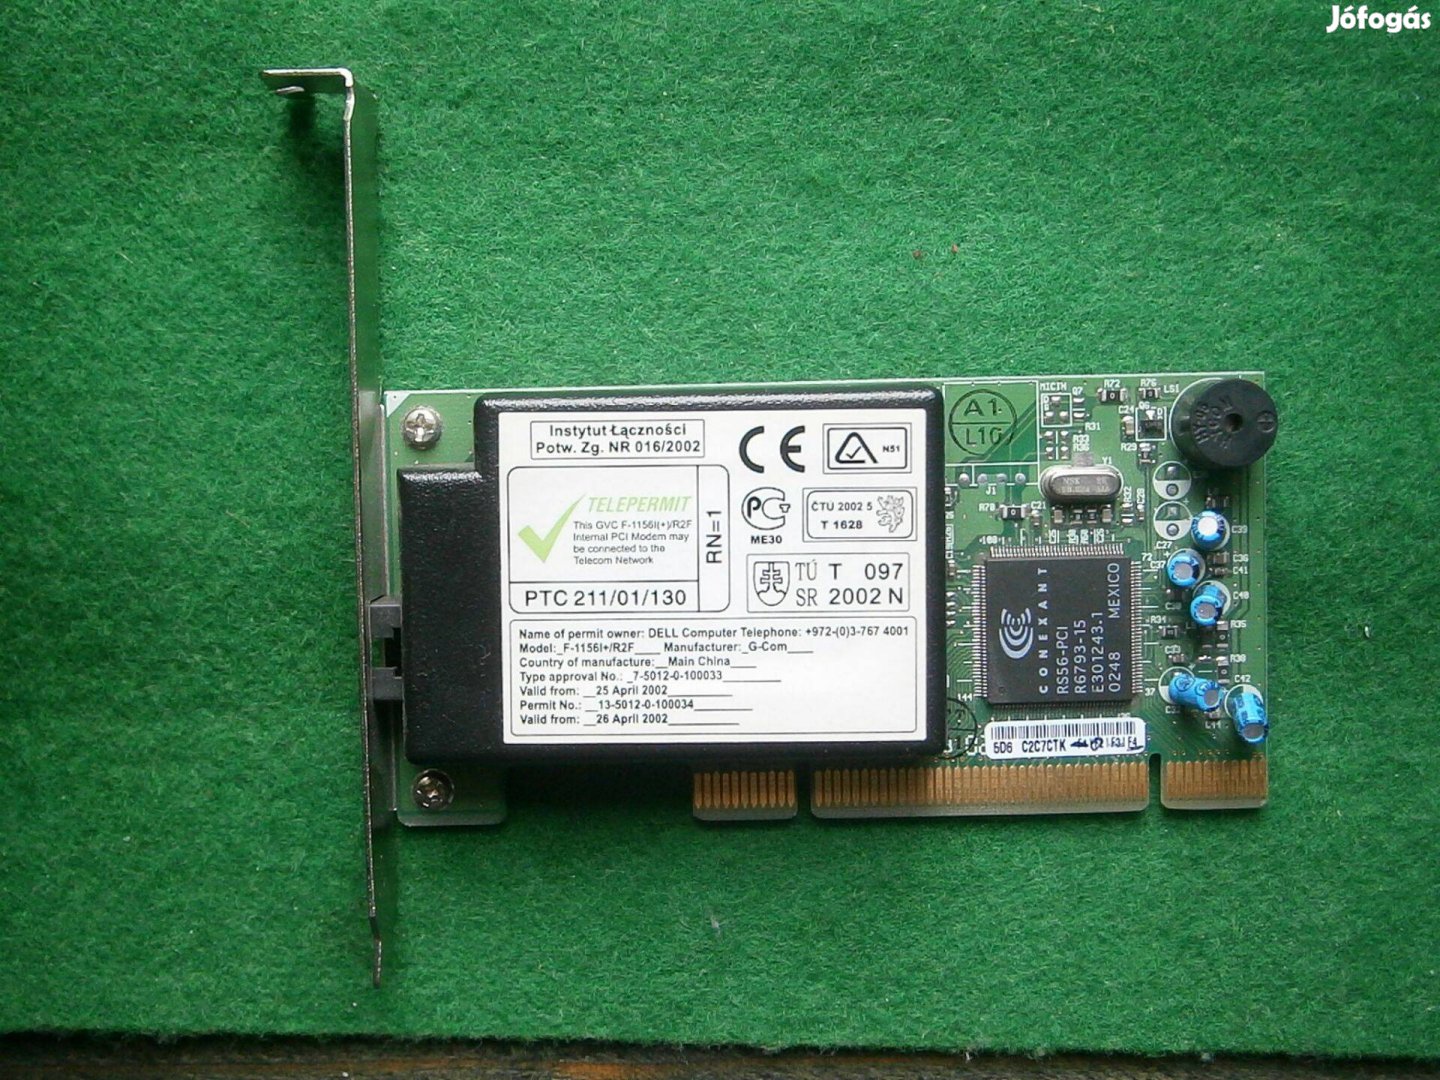 Eladó egy Conexant RS56 (Dell) - PCI belső modem